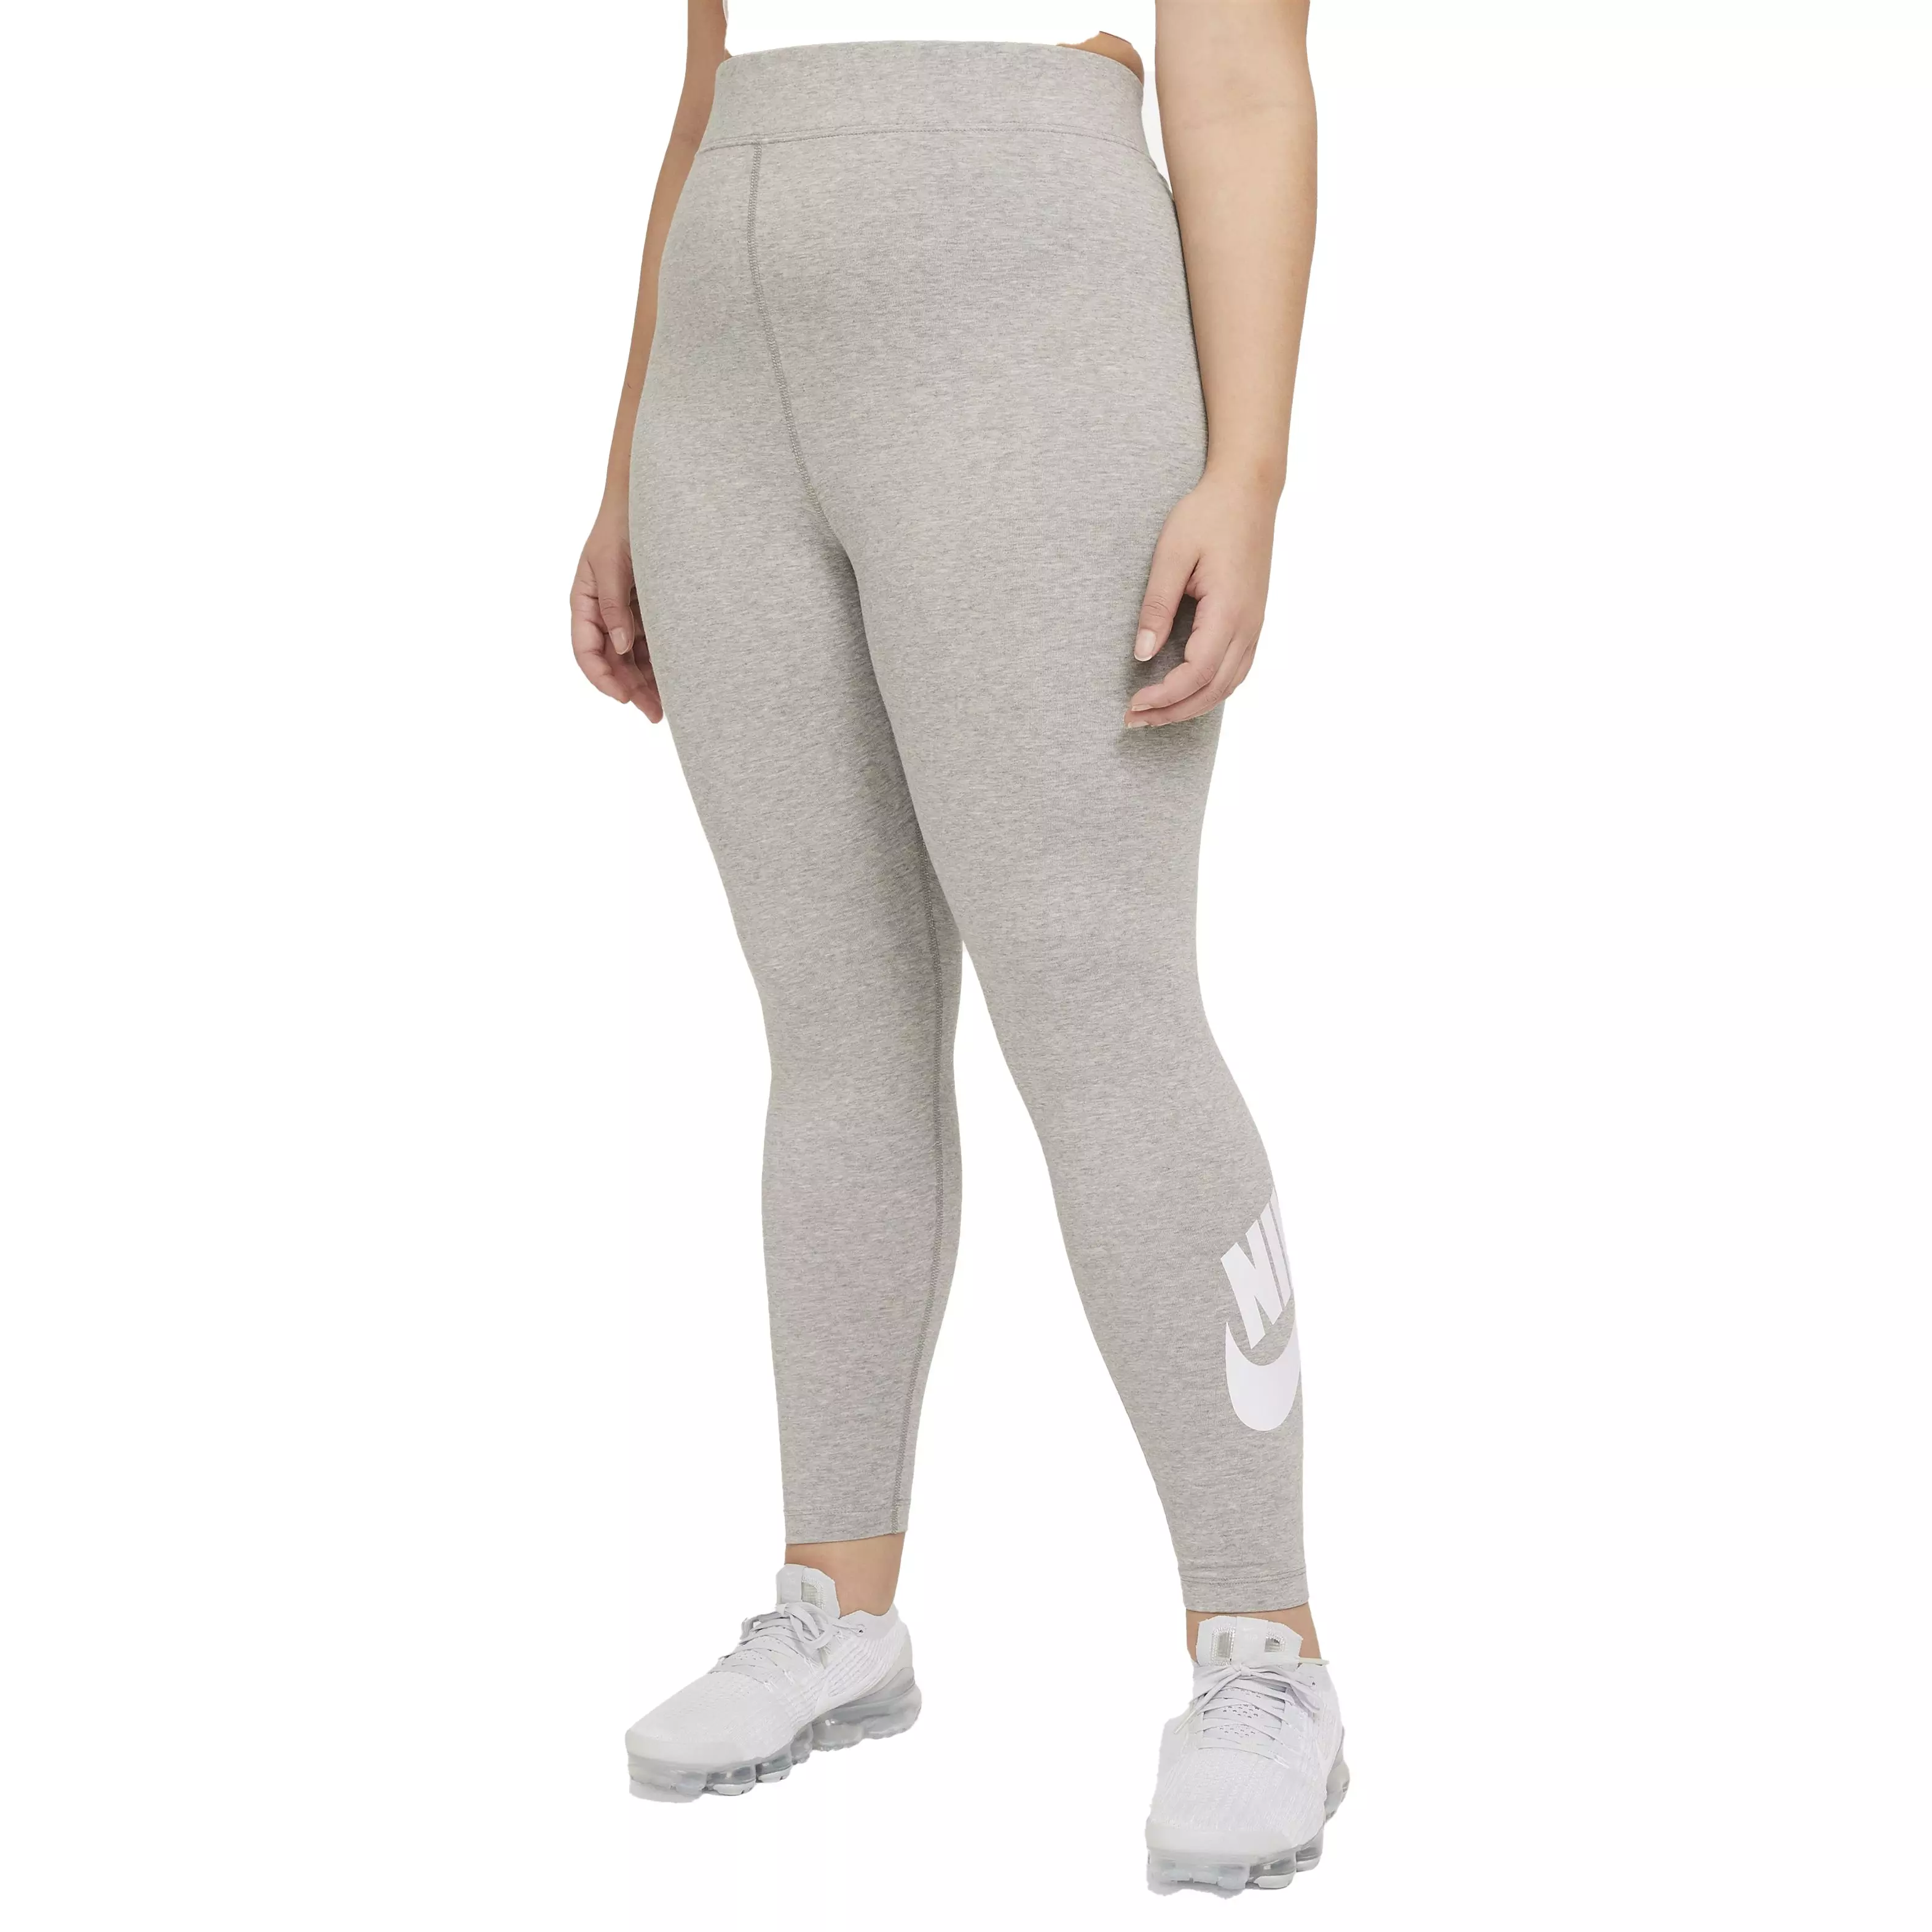 Buy Nike women plus size training essential high rise leggings